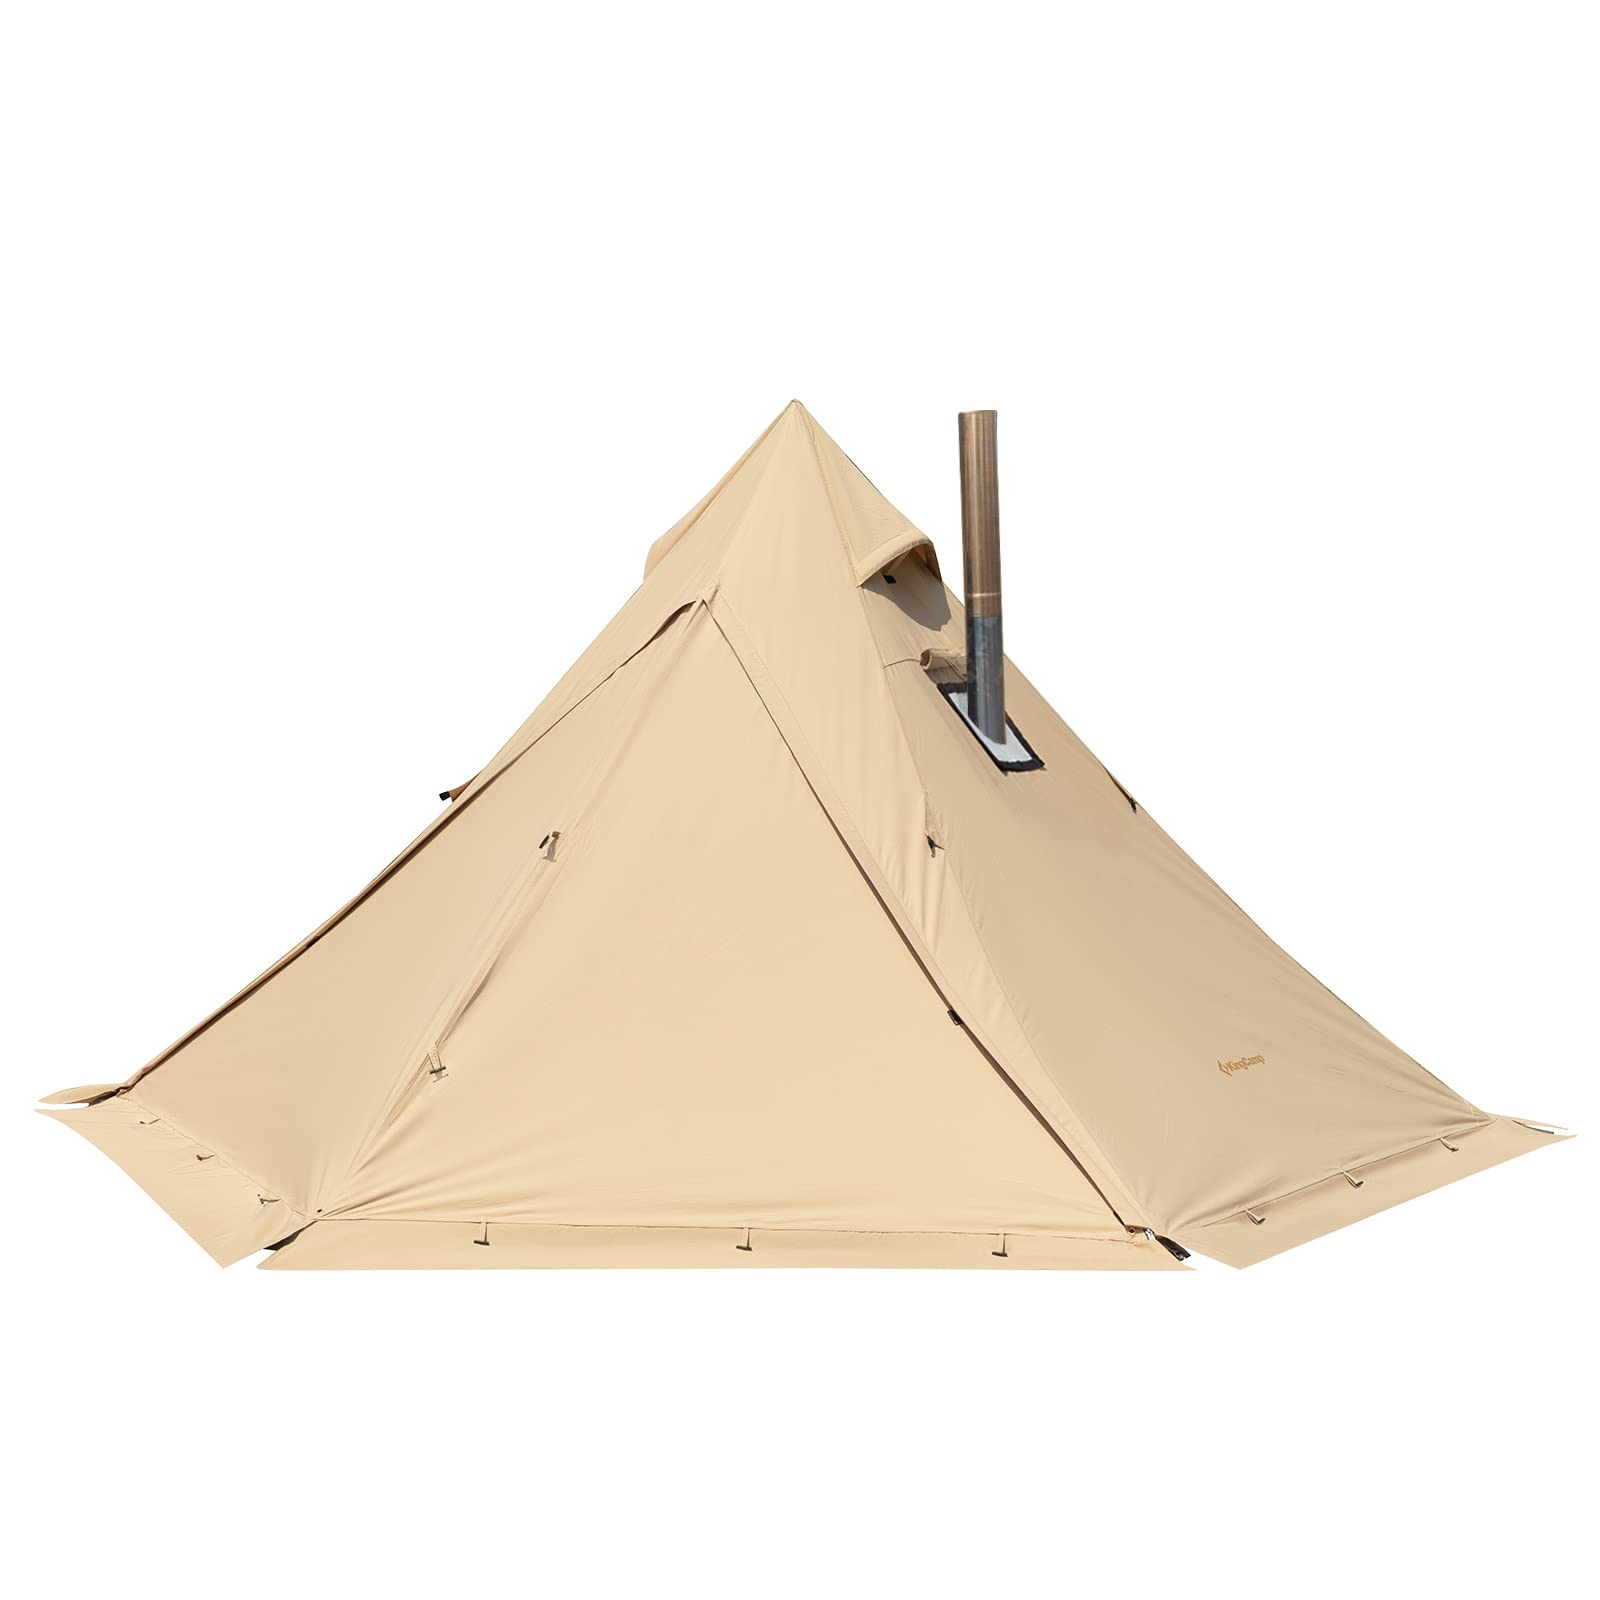 KingCamp hot tent